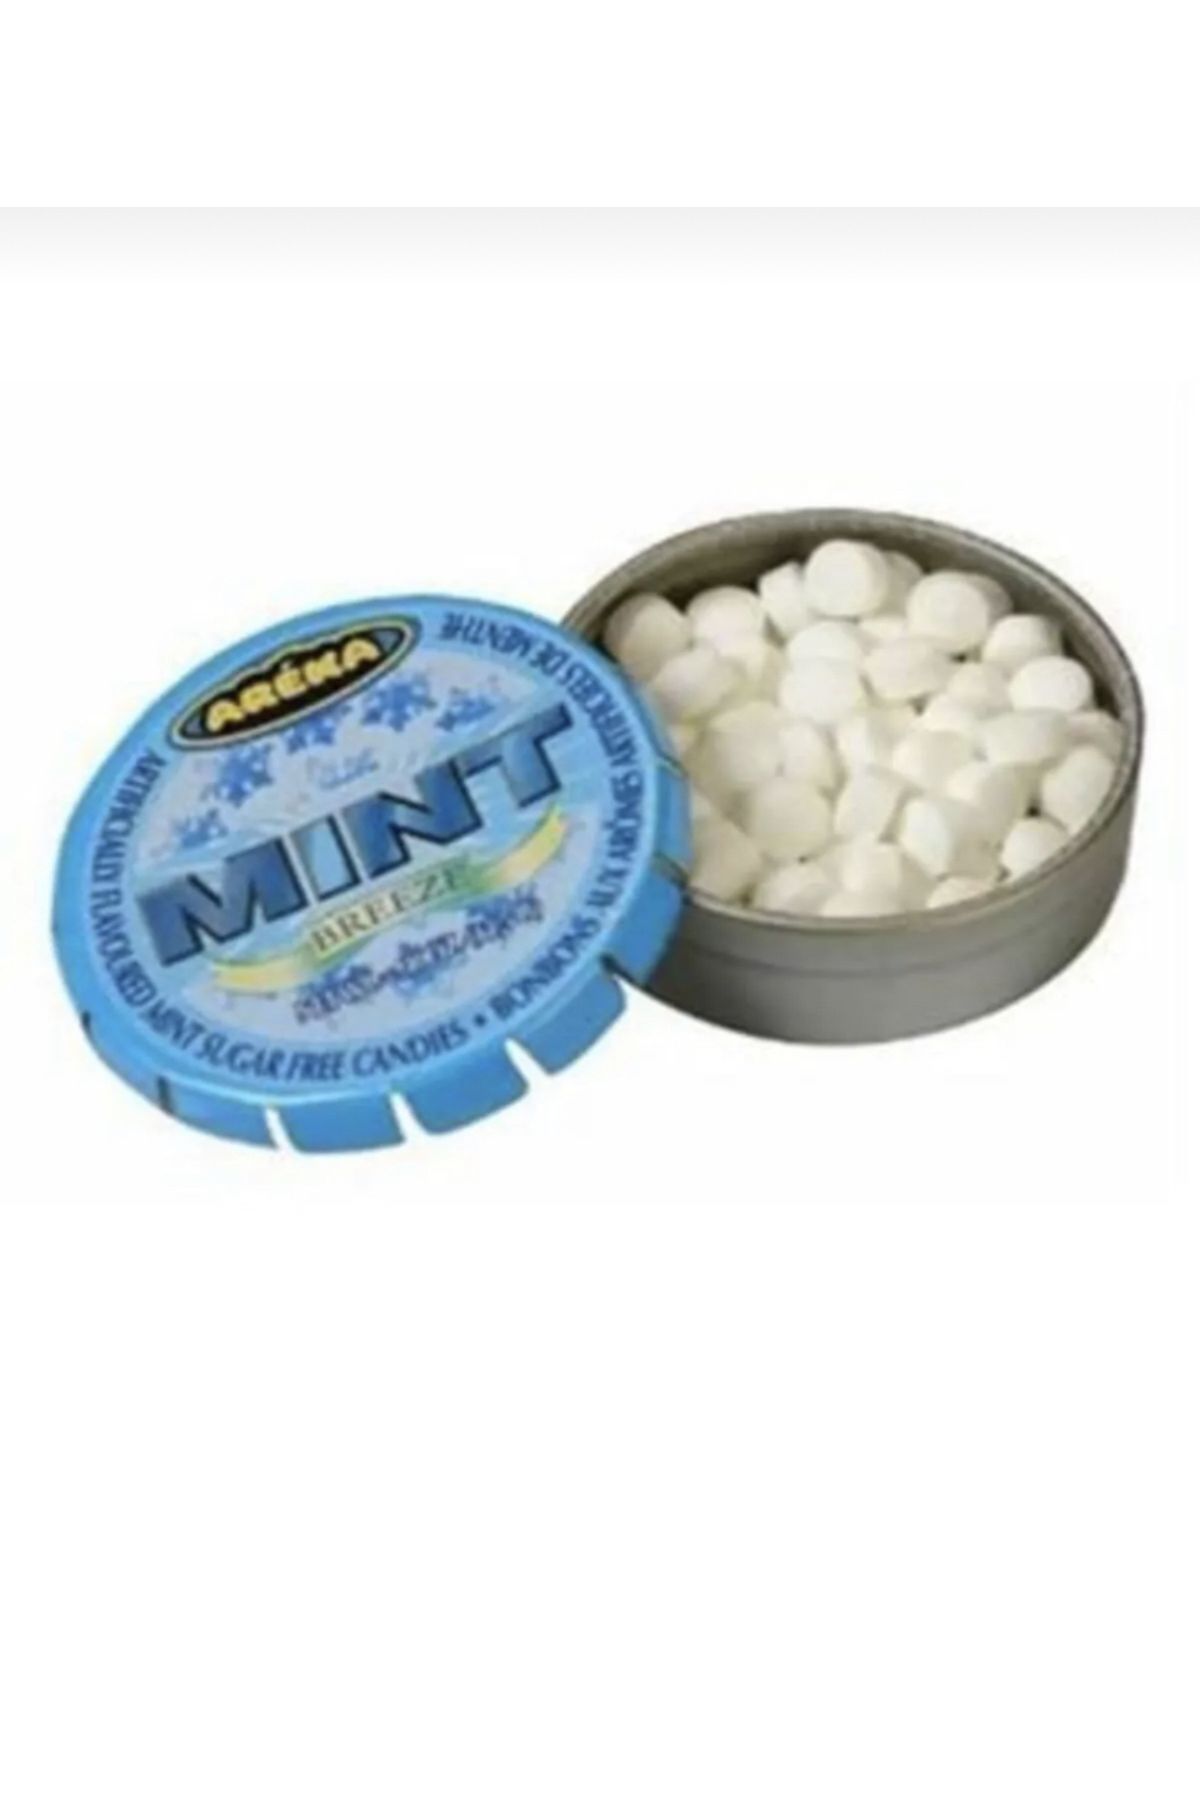 Areka Mint naneli şeker 11,5 grm 1 adet